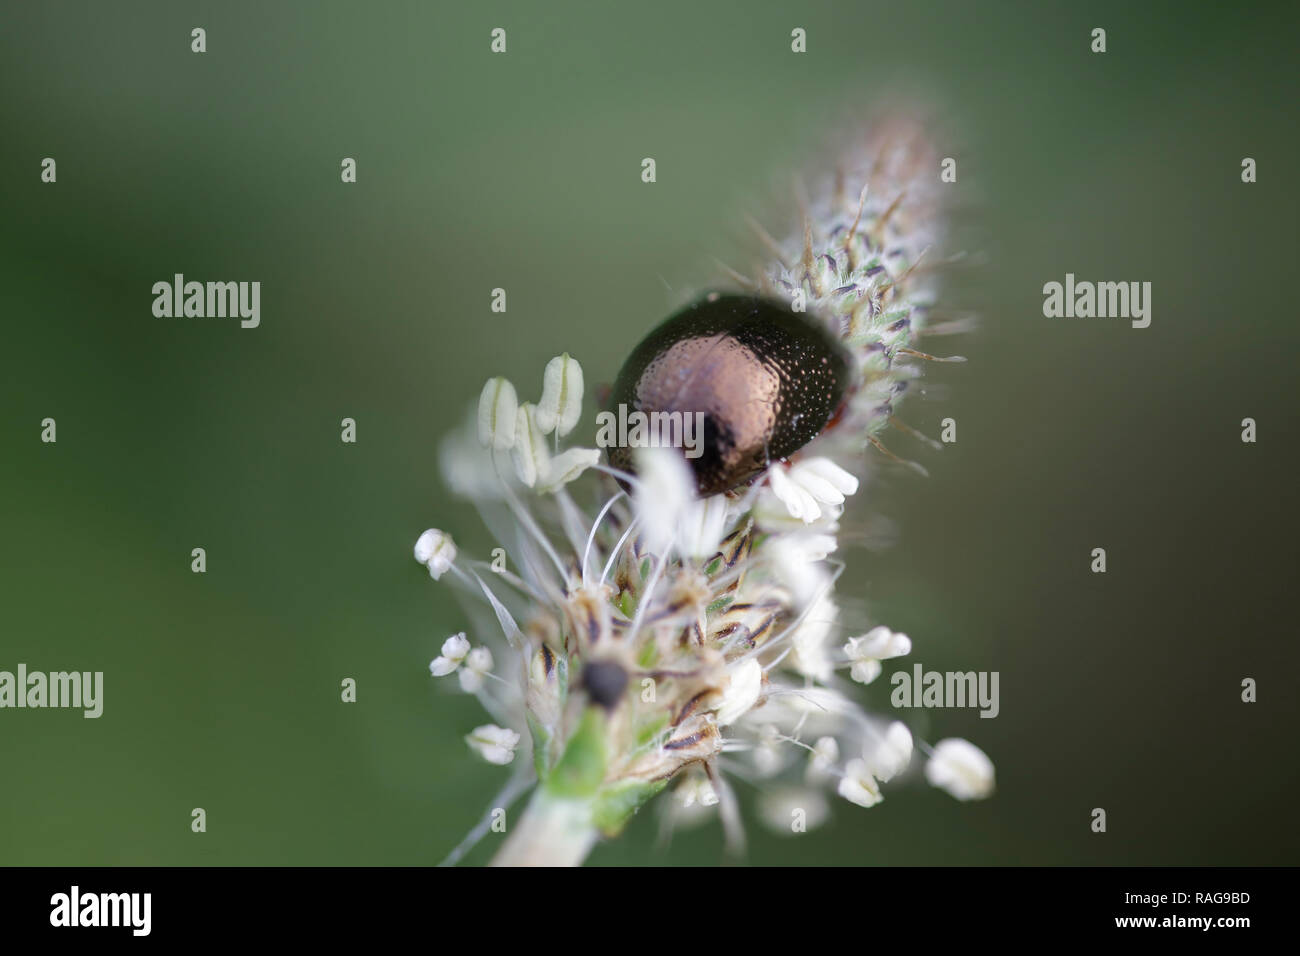 Metallic beetle in a wild flower. Shallow DOF. Stock Photo